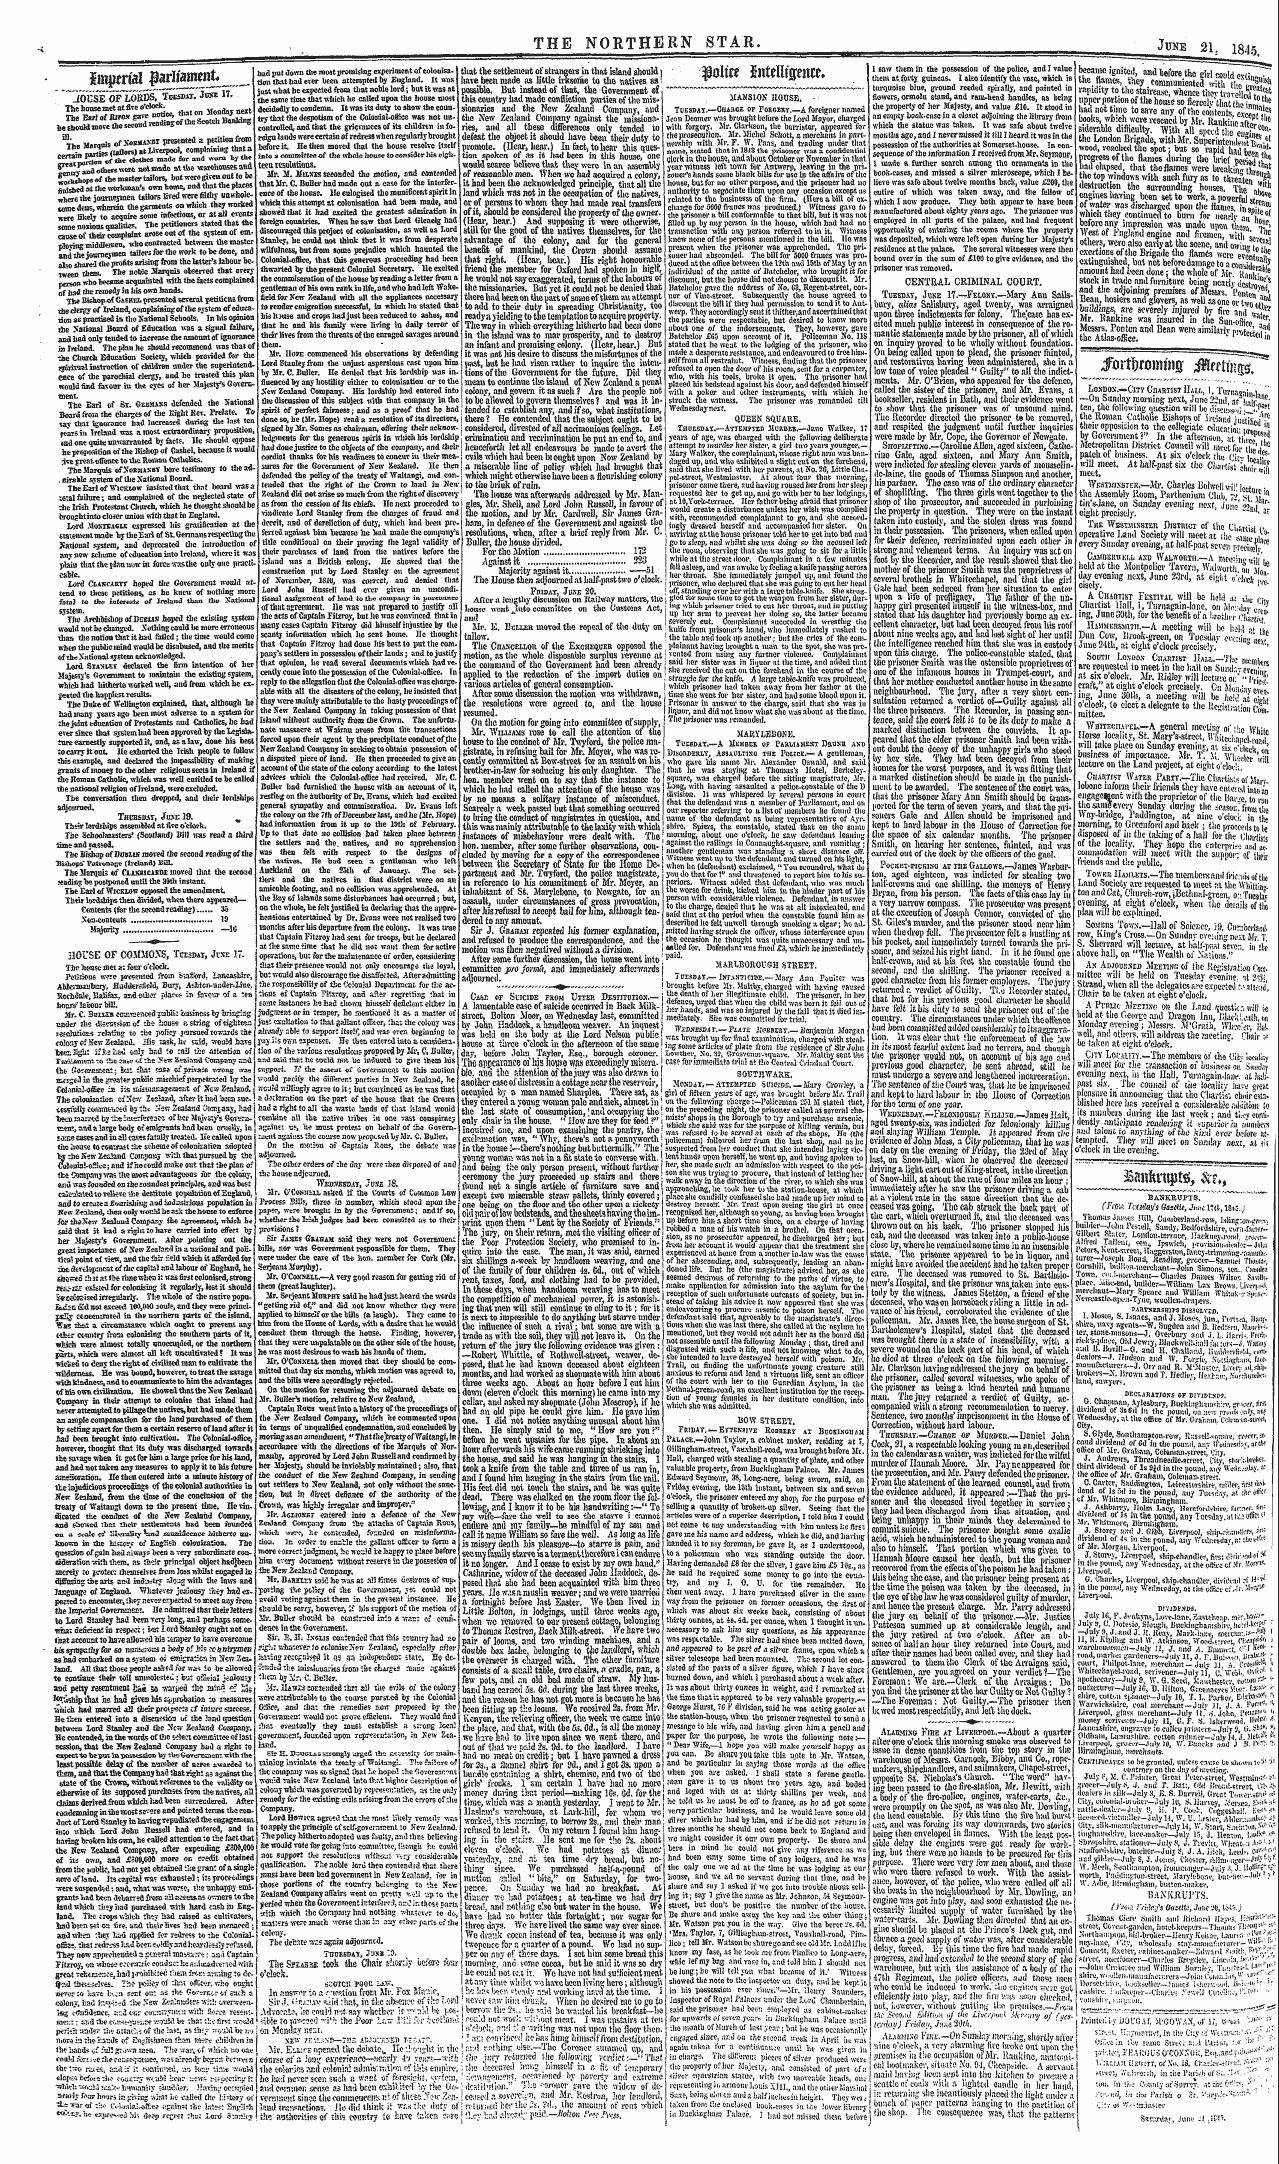 Northern Star (1837-1852): jS F Y, 3rd edition - Sanfonipts, &??,